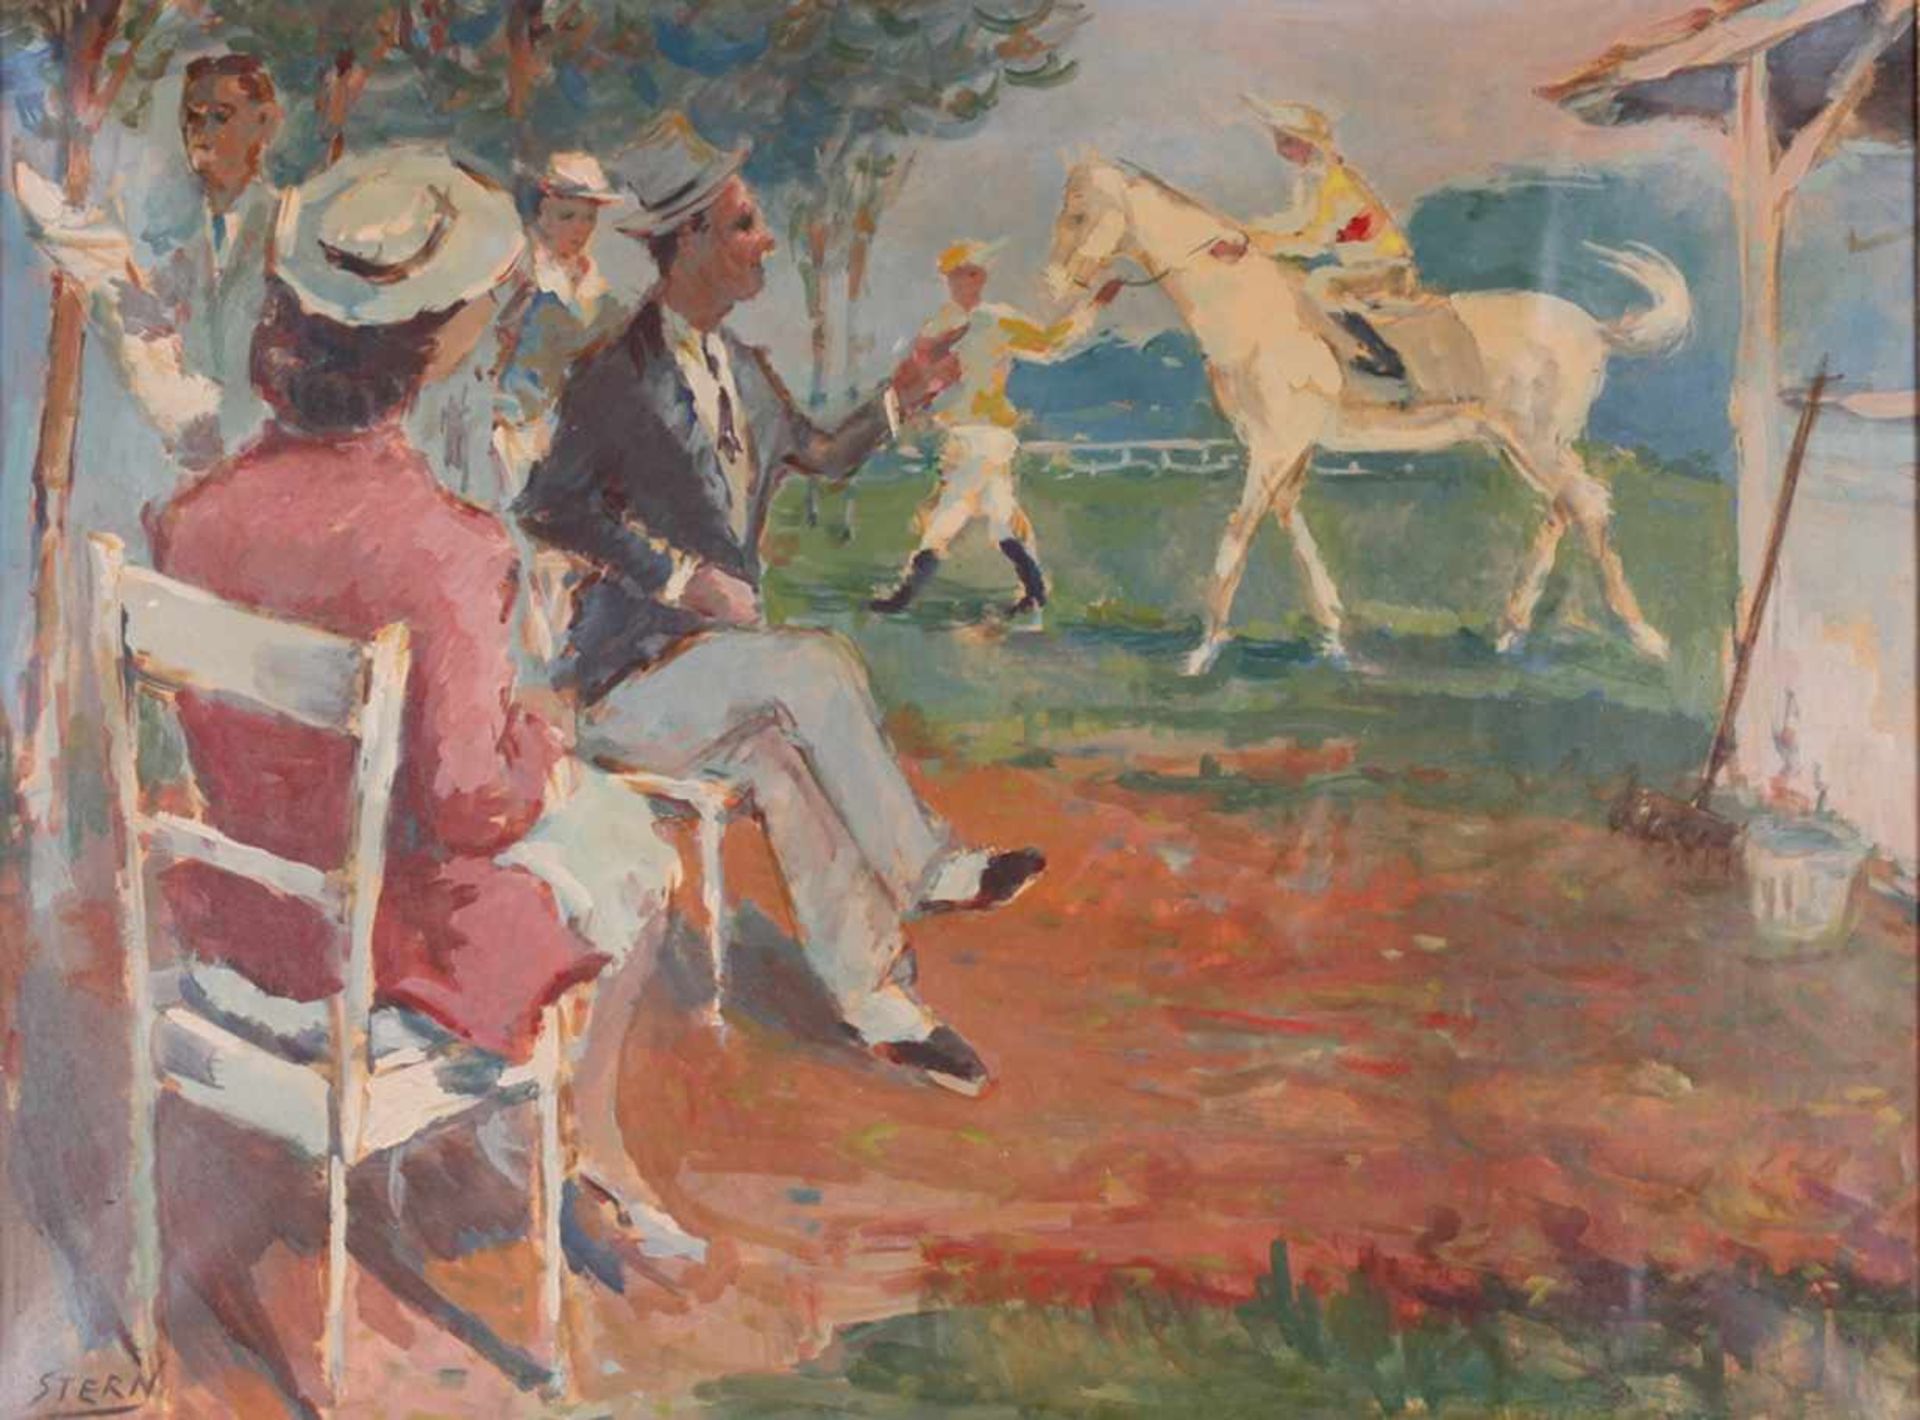 Stern, Ernst. Horse race. [Early XX century]. Oil on canvas. 46x61 cm.- - -15.00 % buyer's premium